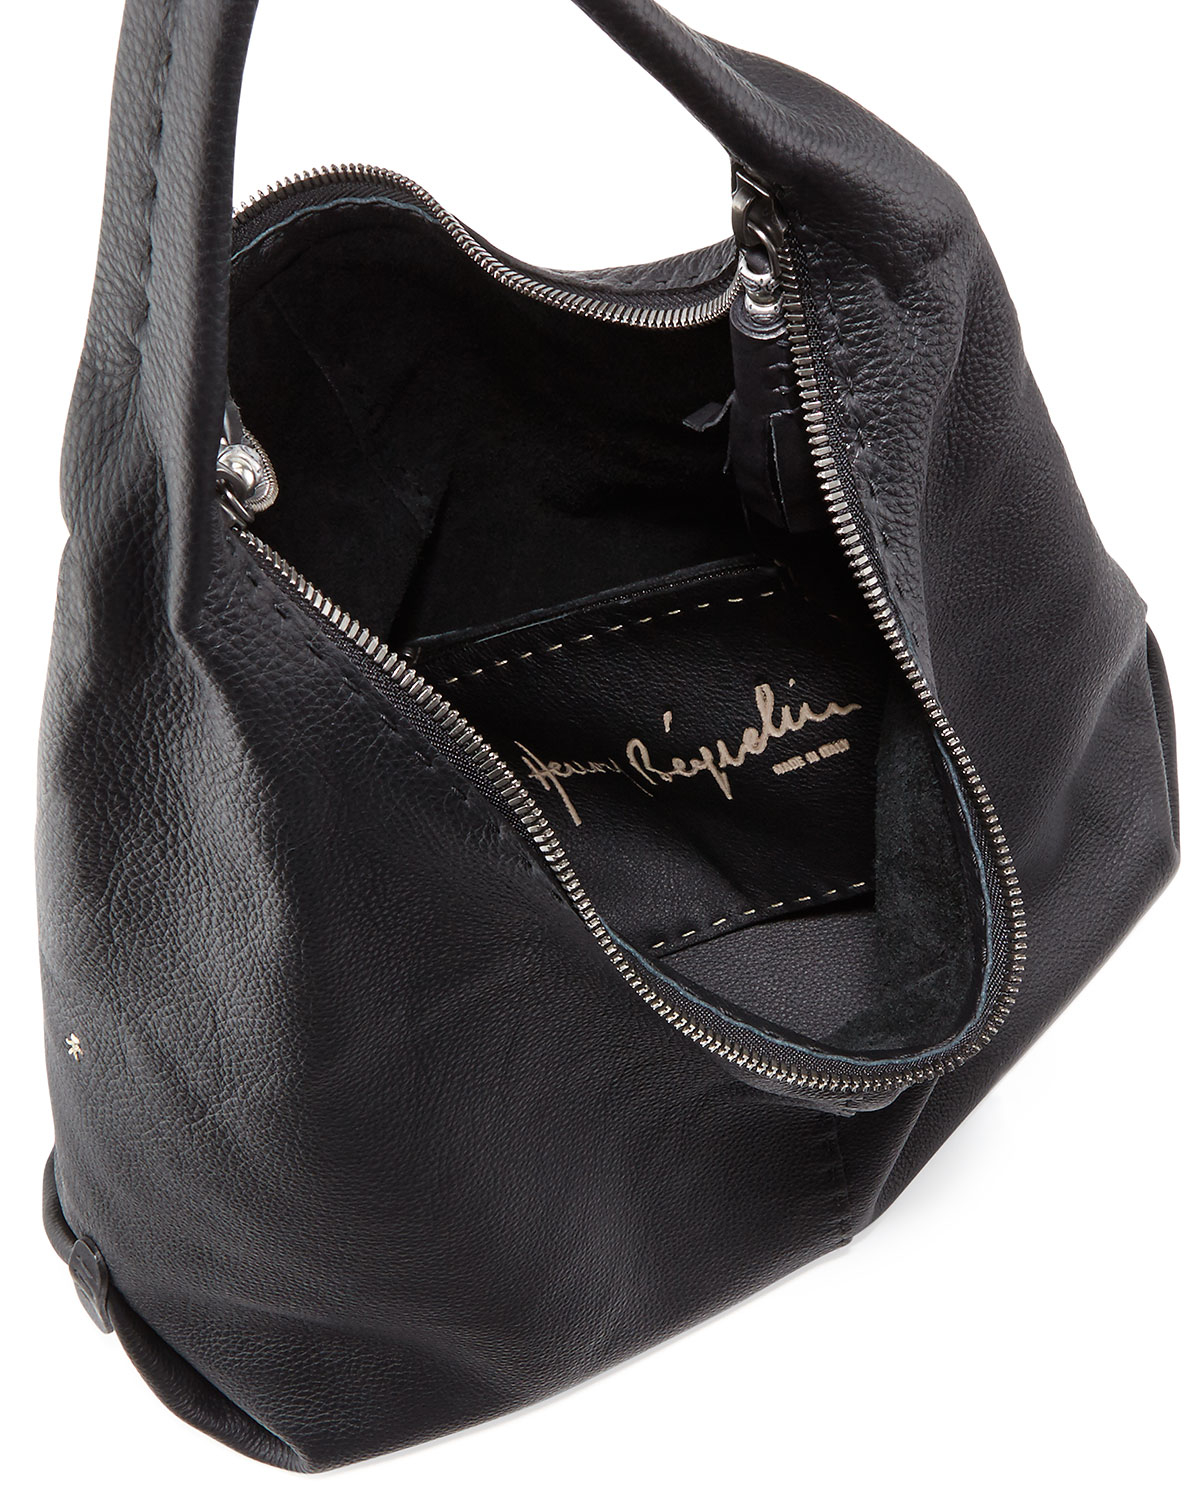 Lyst - Henry Beguelin Canotta Leather Hobo Bag in Black